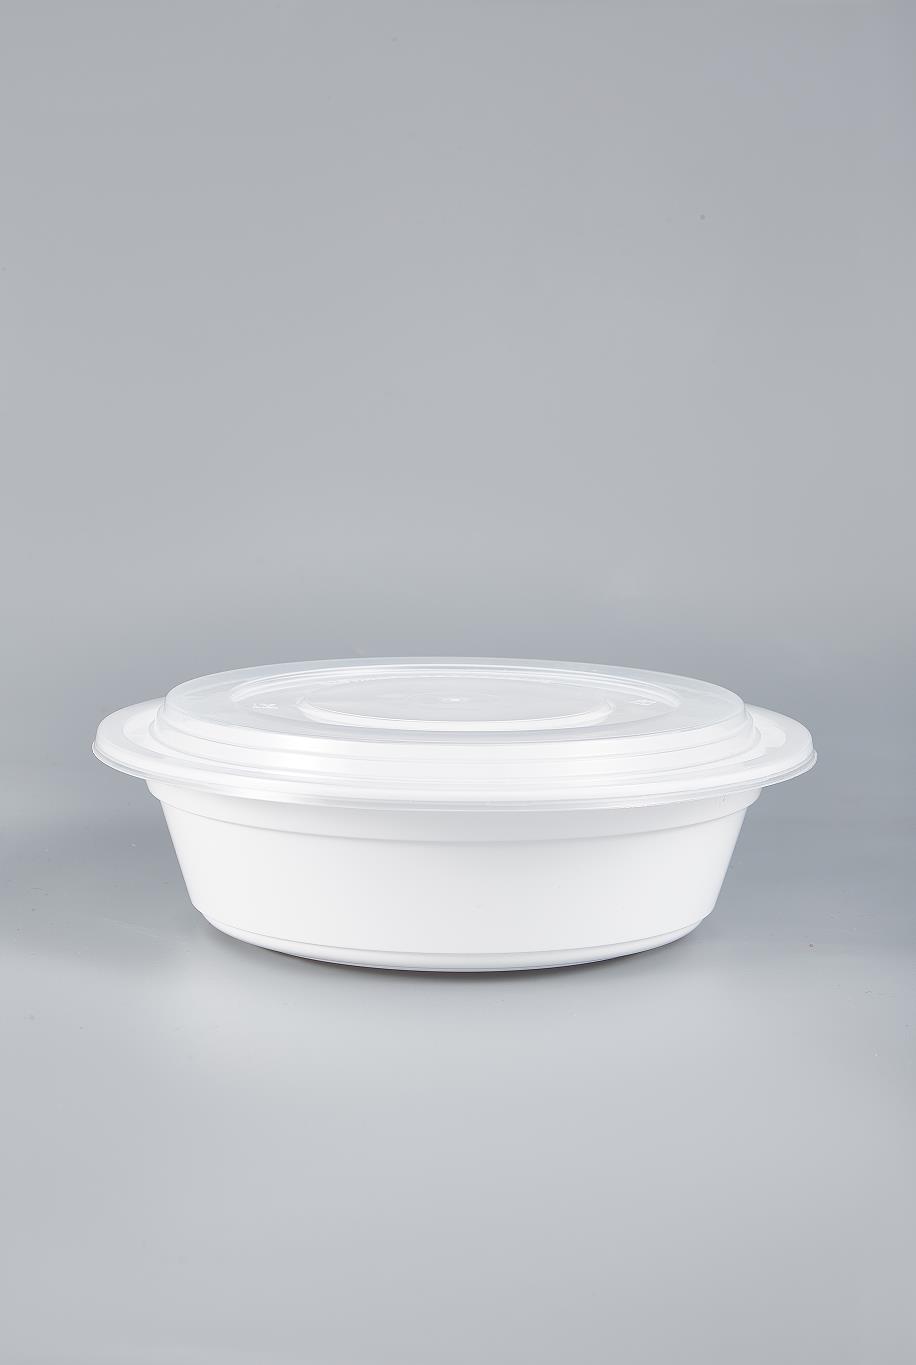 729 Round bowl&lid